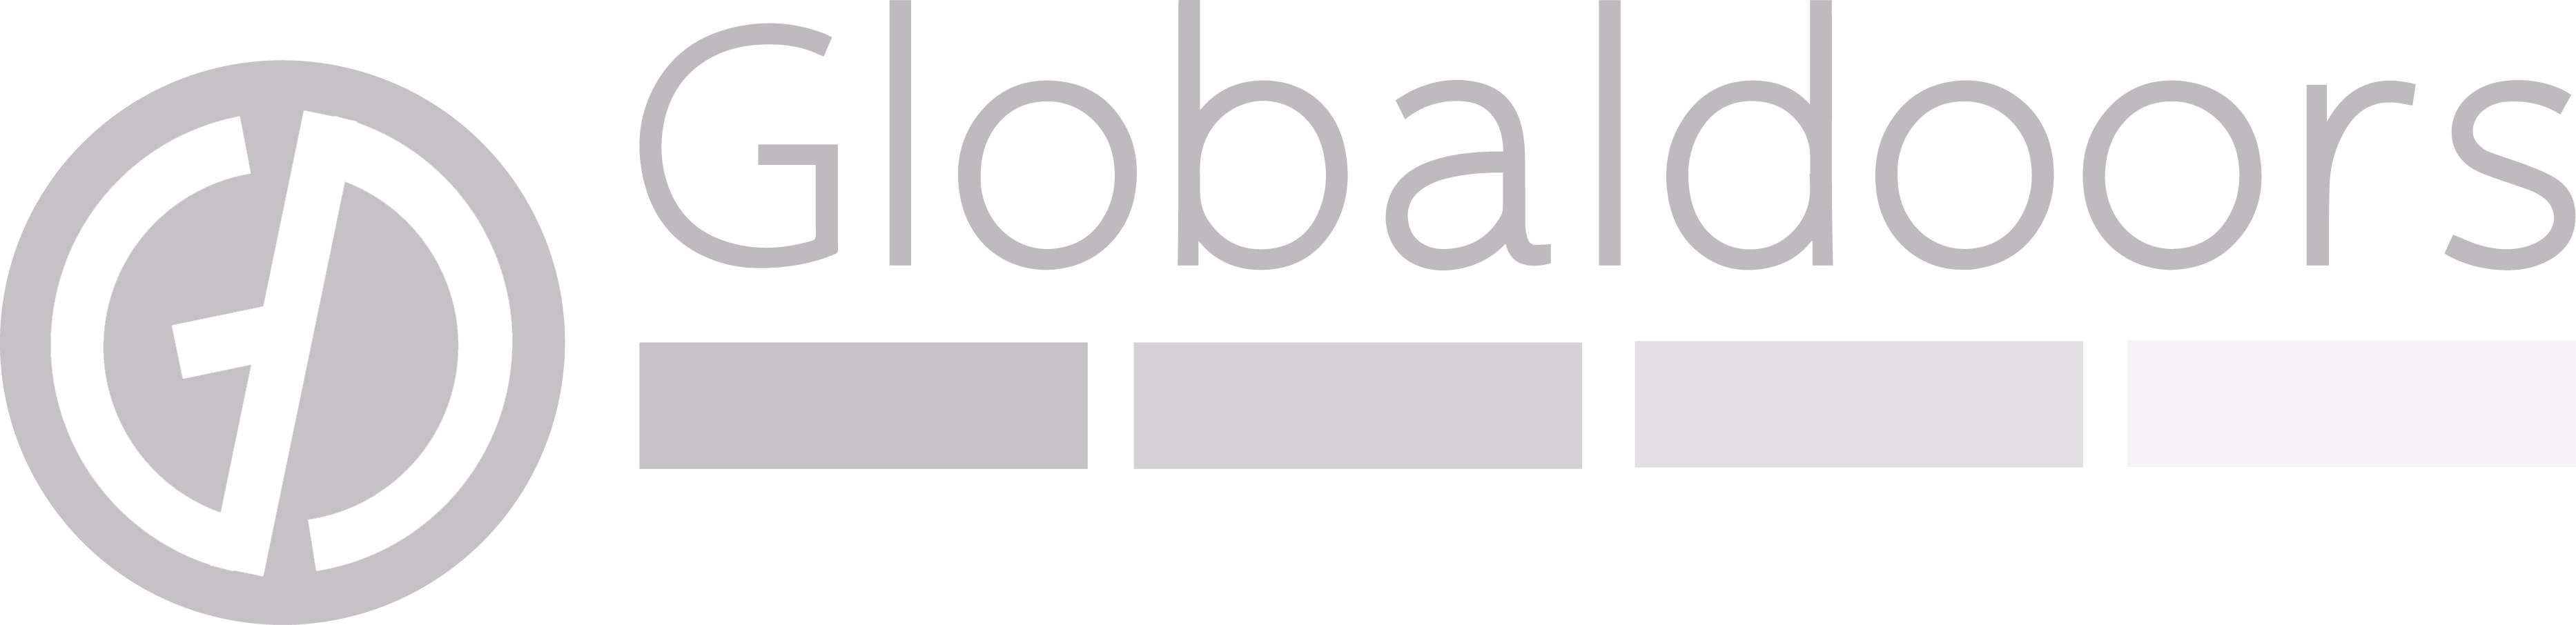 Glassdoors logo